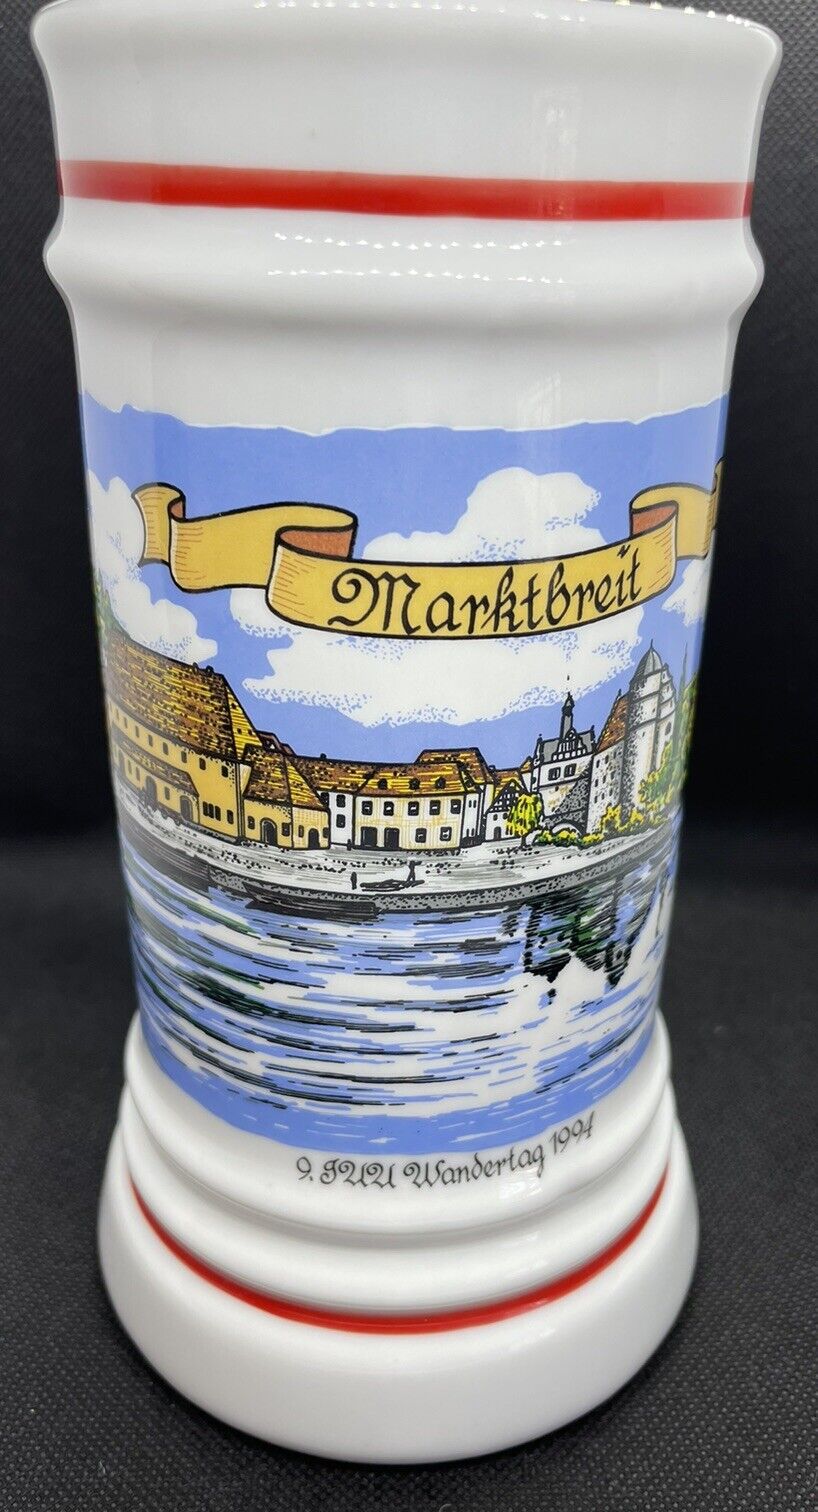 Vtg 1994 IVV Wandertag 9 Markbreit Ceramic Beer Stein Mug Germany Scenic River